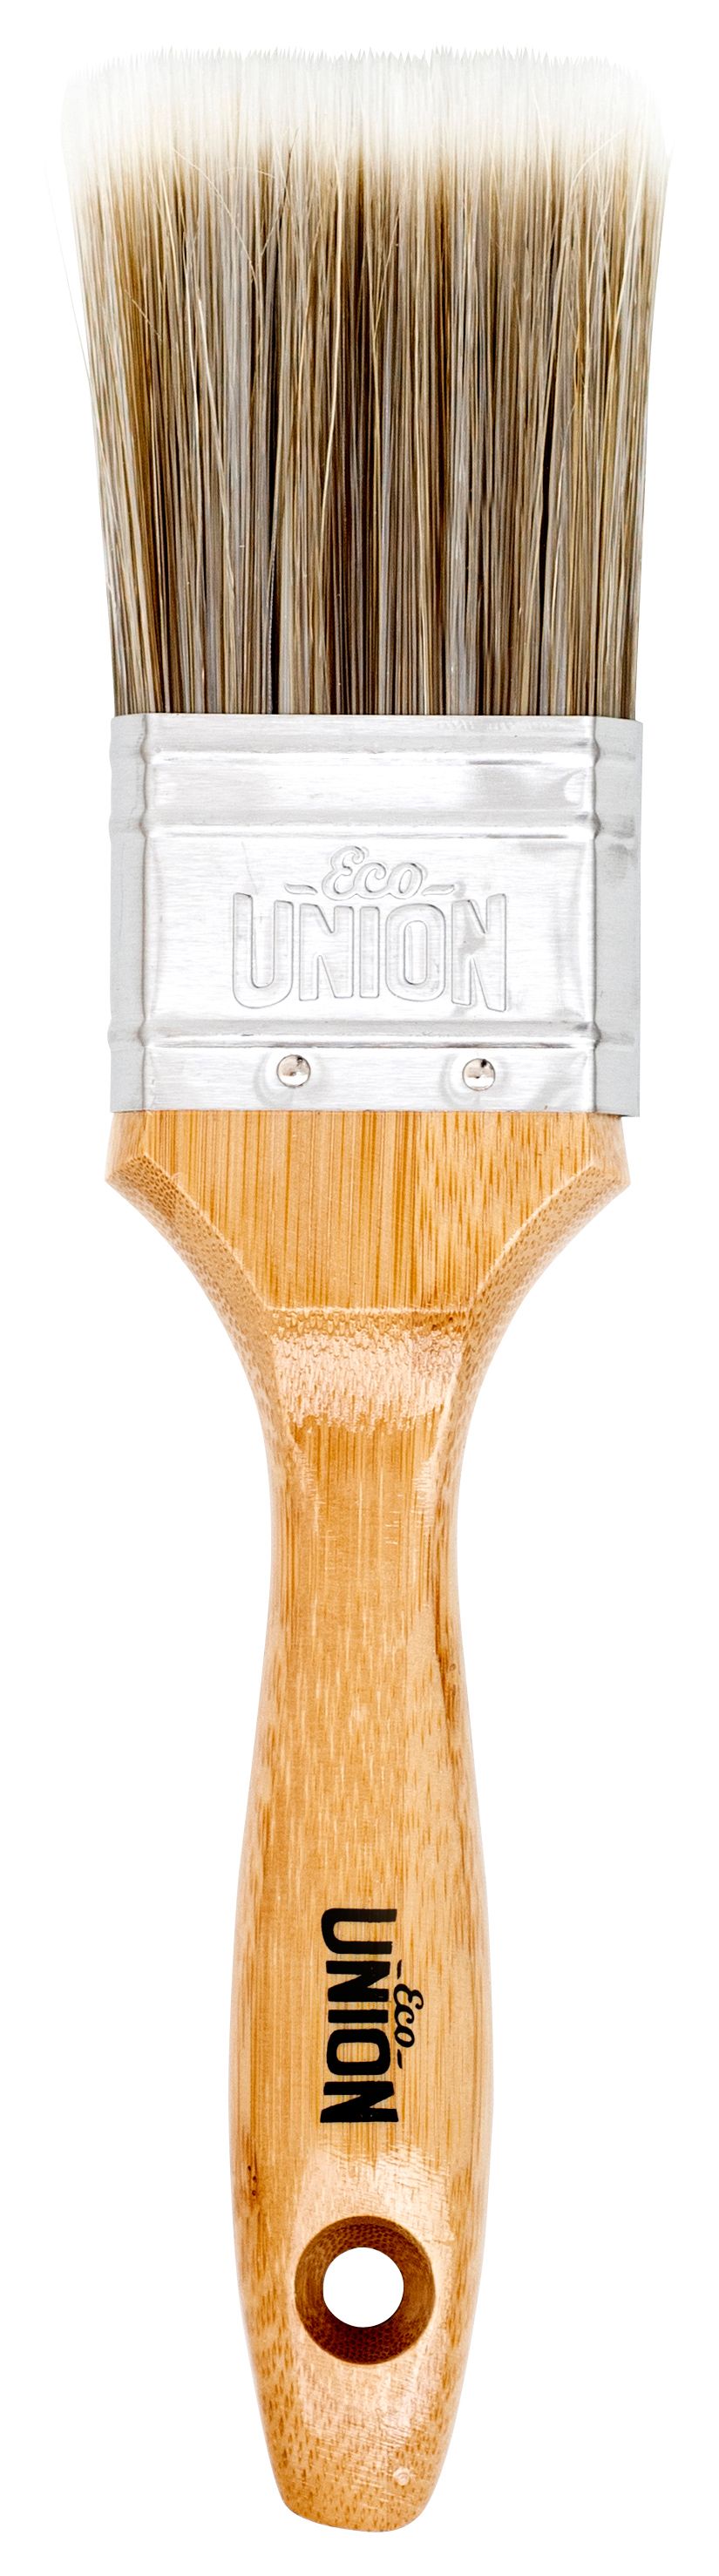 Image of Eco Union Pro Paint Brush - 2in